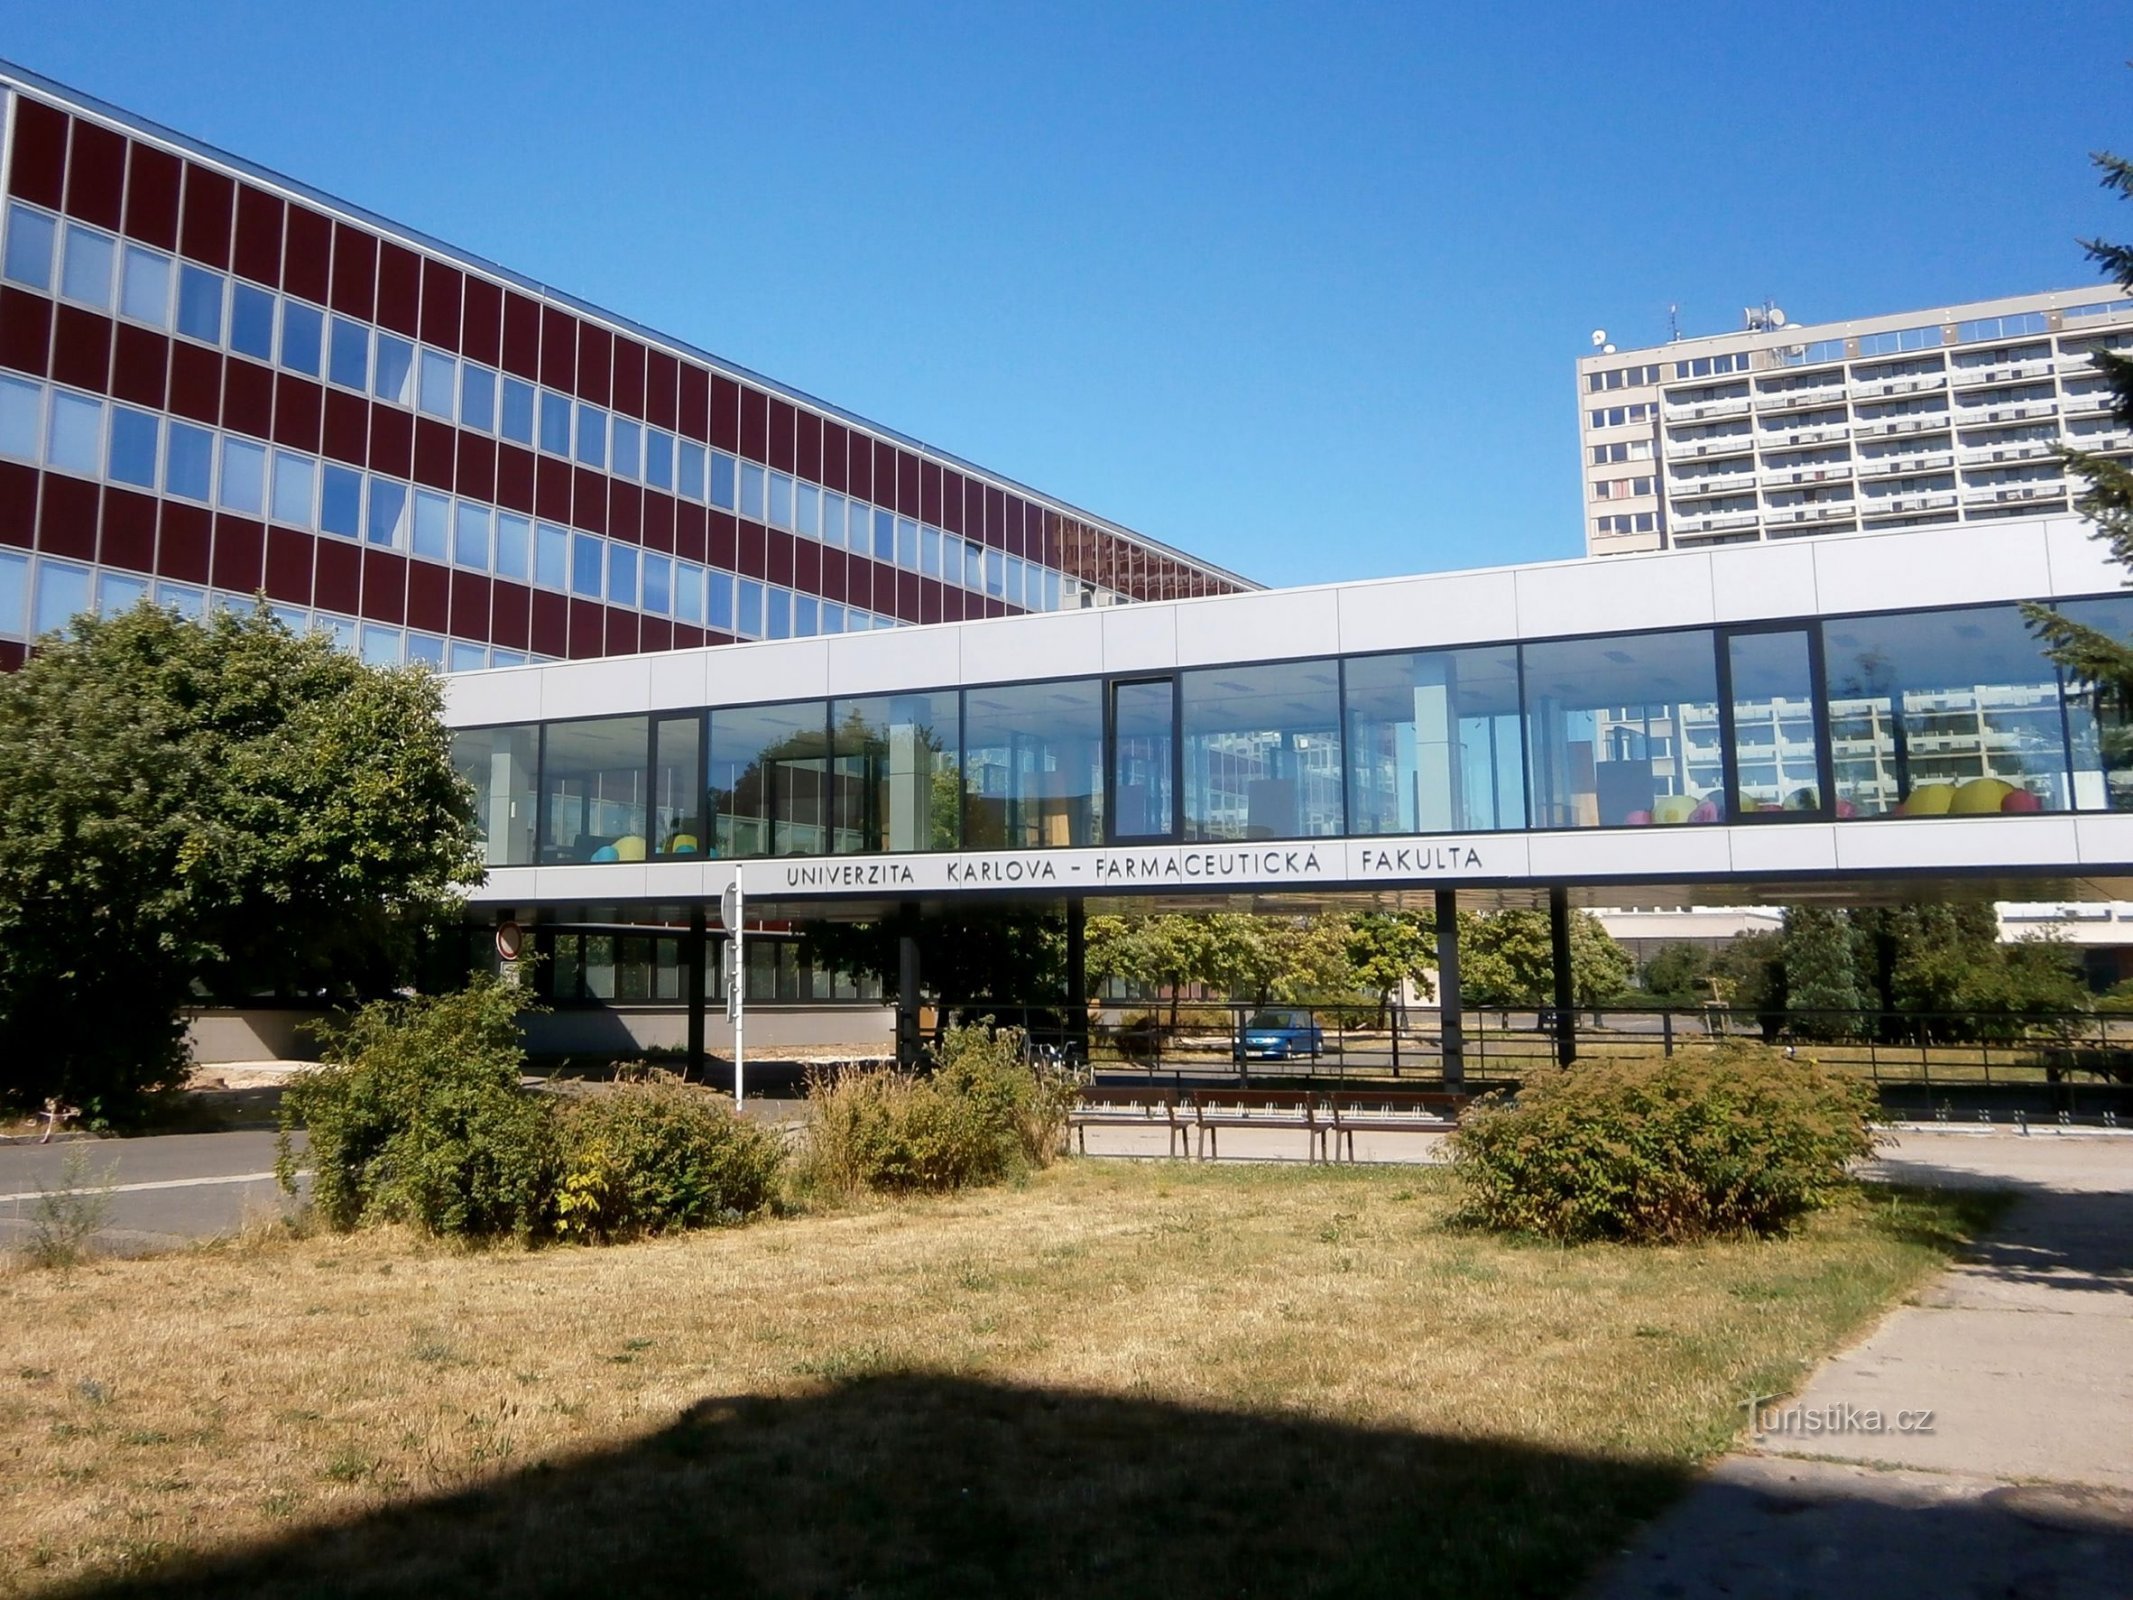 Farmaceutiska fakulteten, Charles University (Hradec Králové, 26.7.2015 juni XNUMX)